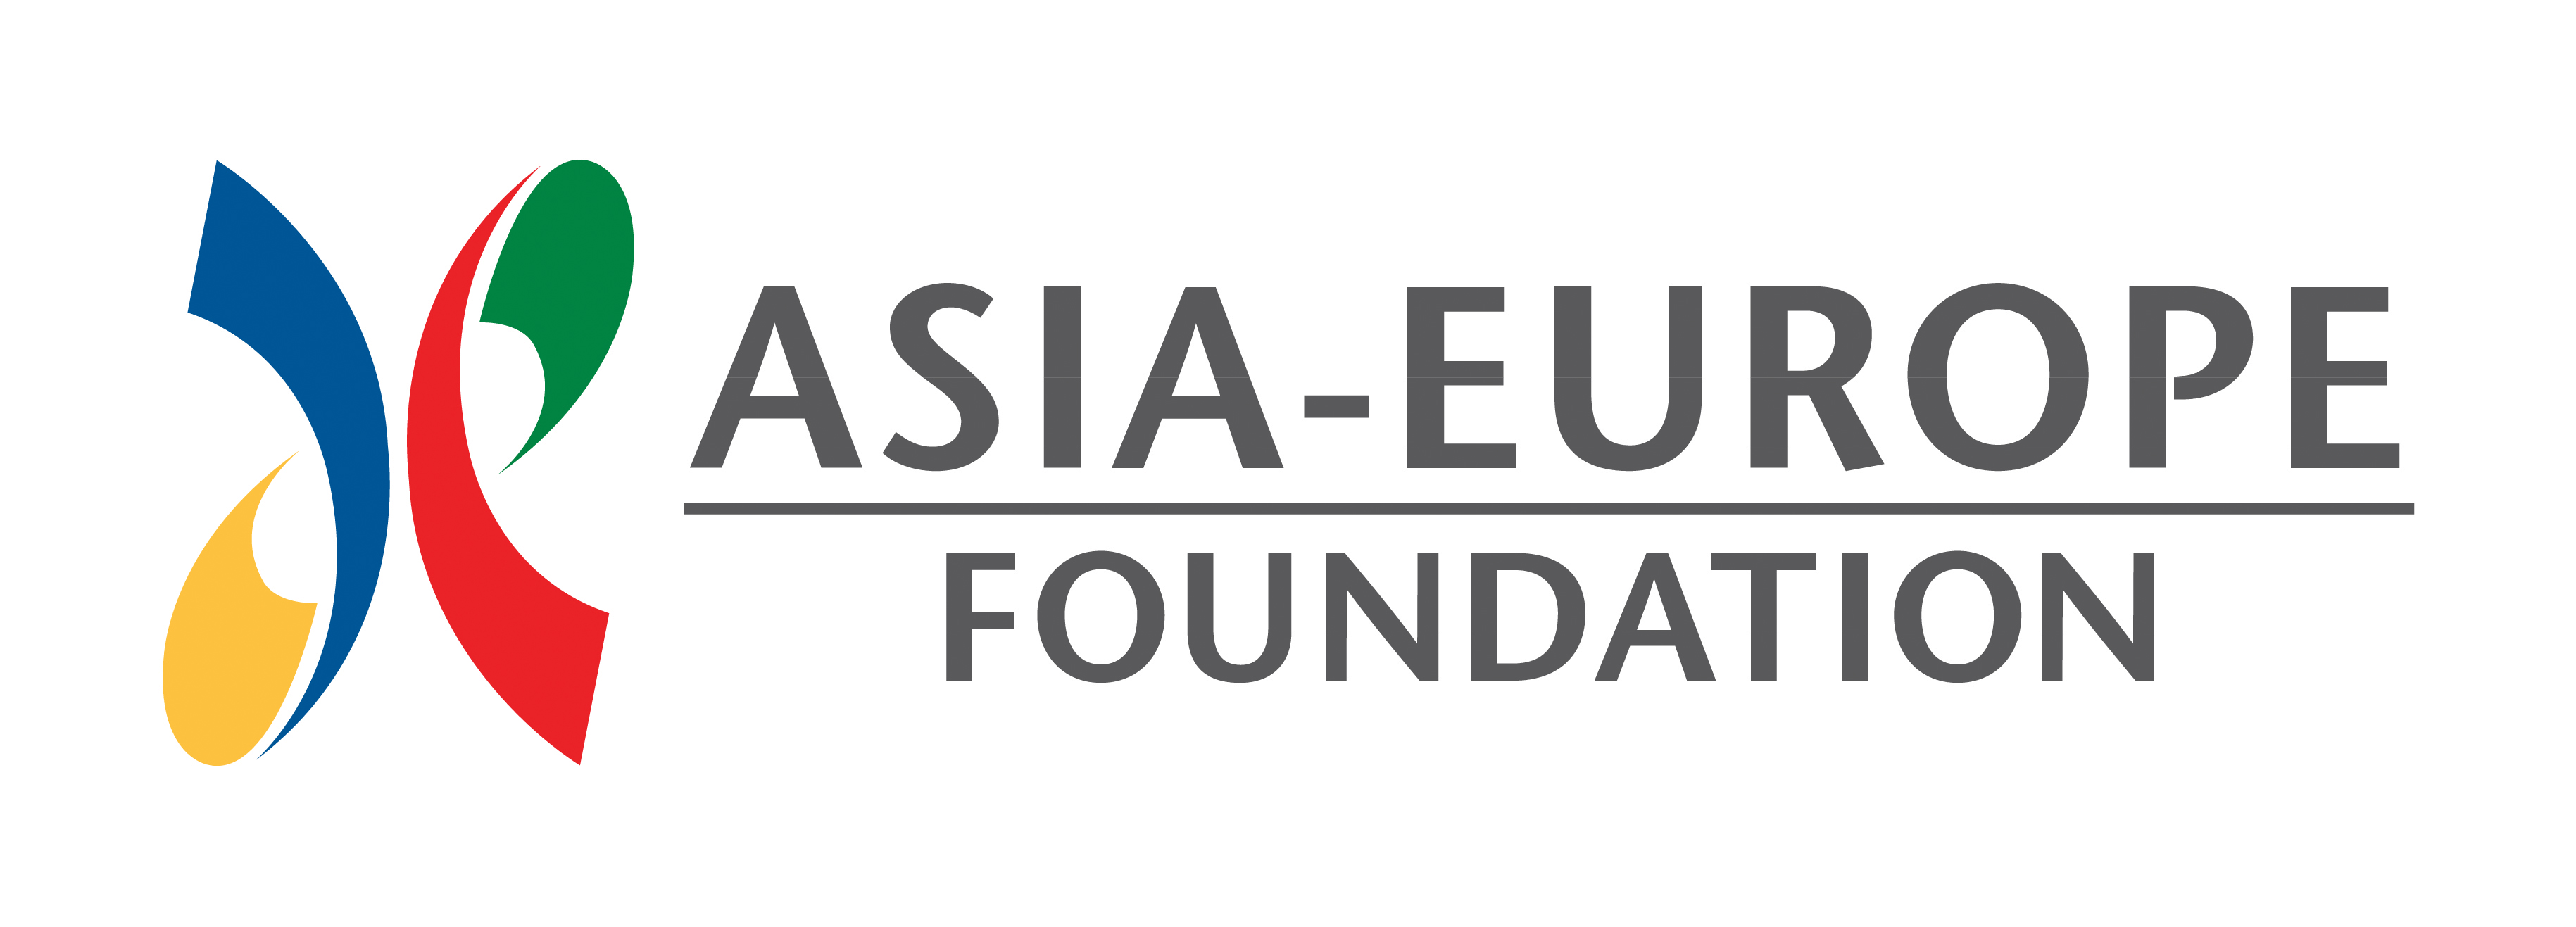 Asia-Europe Foundation